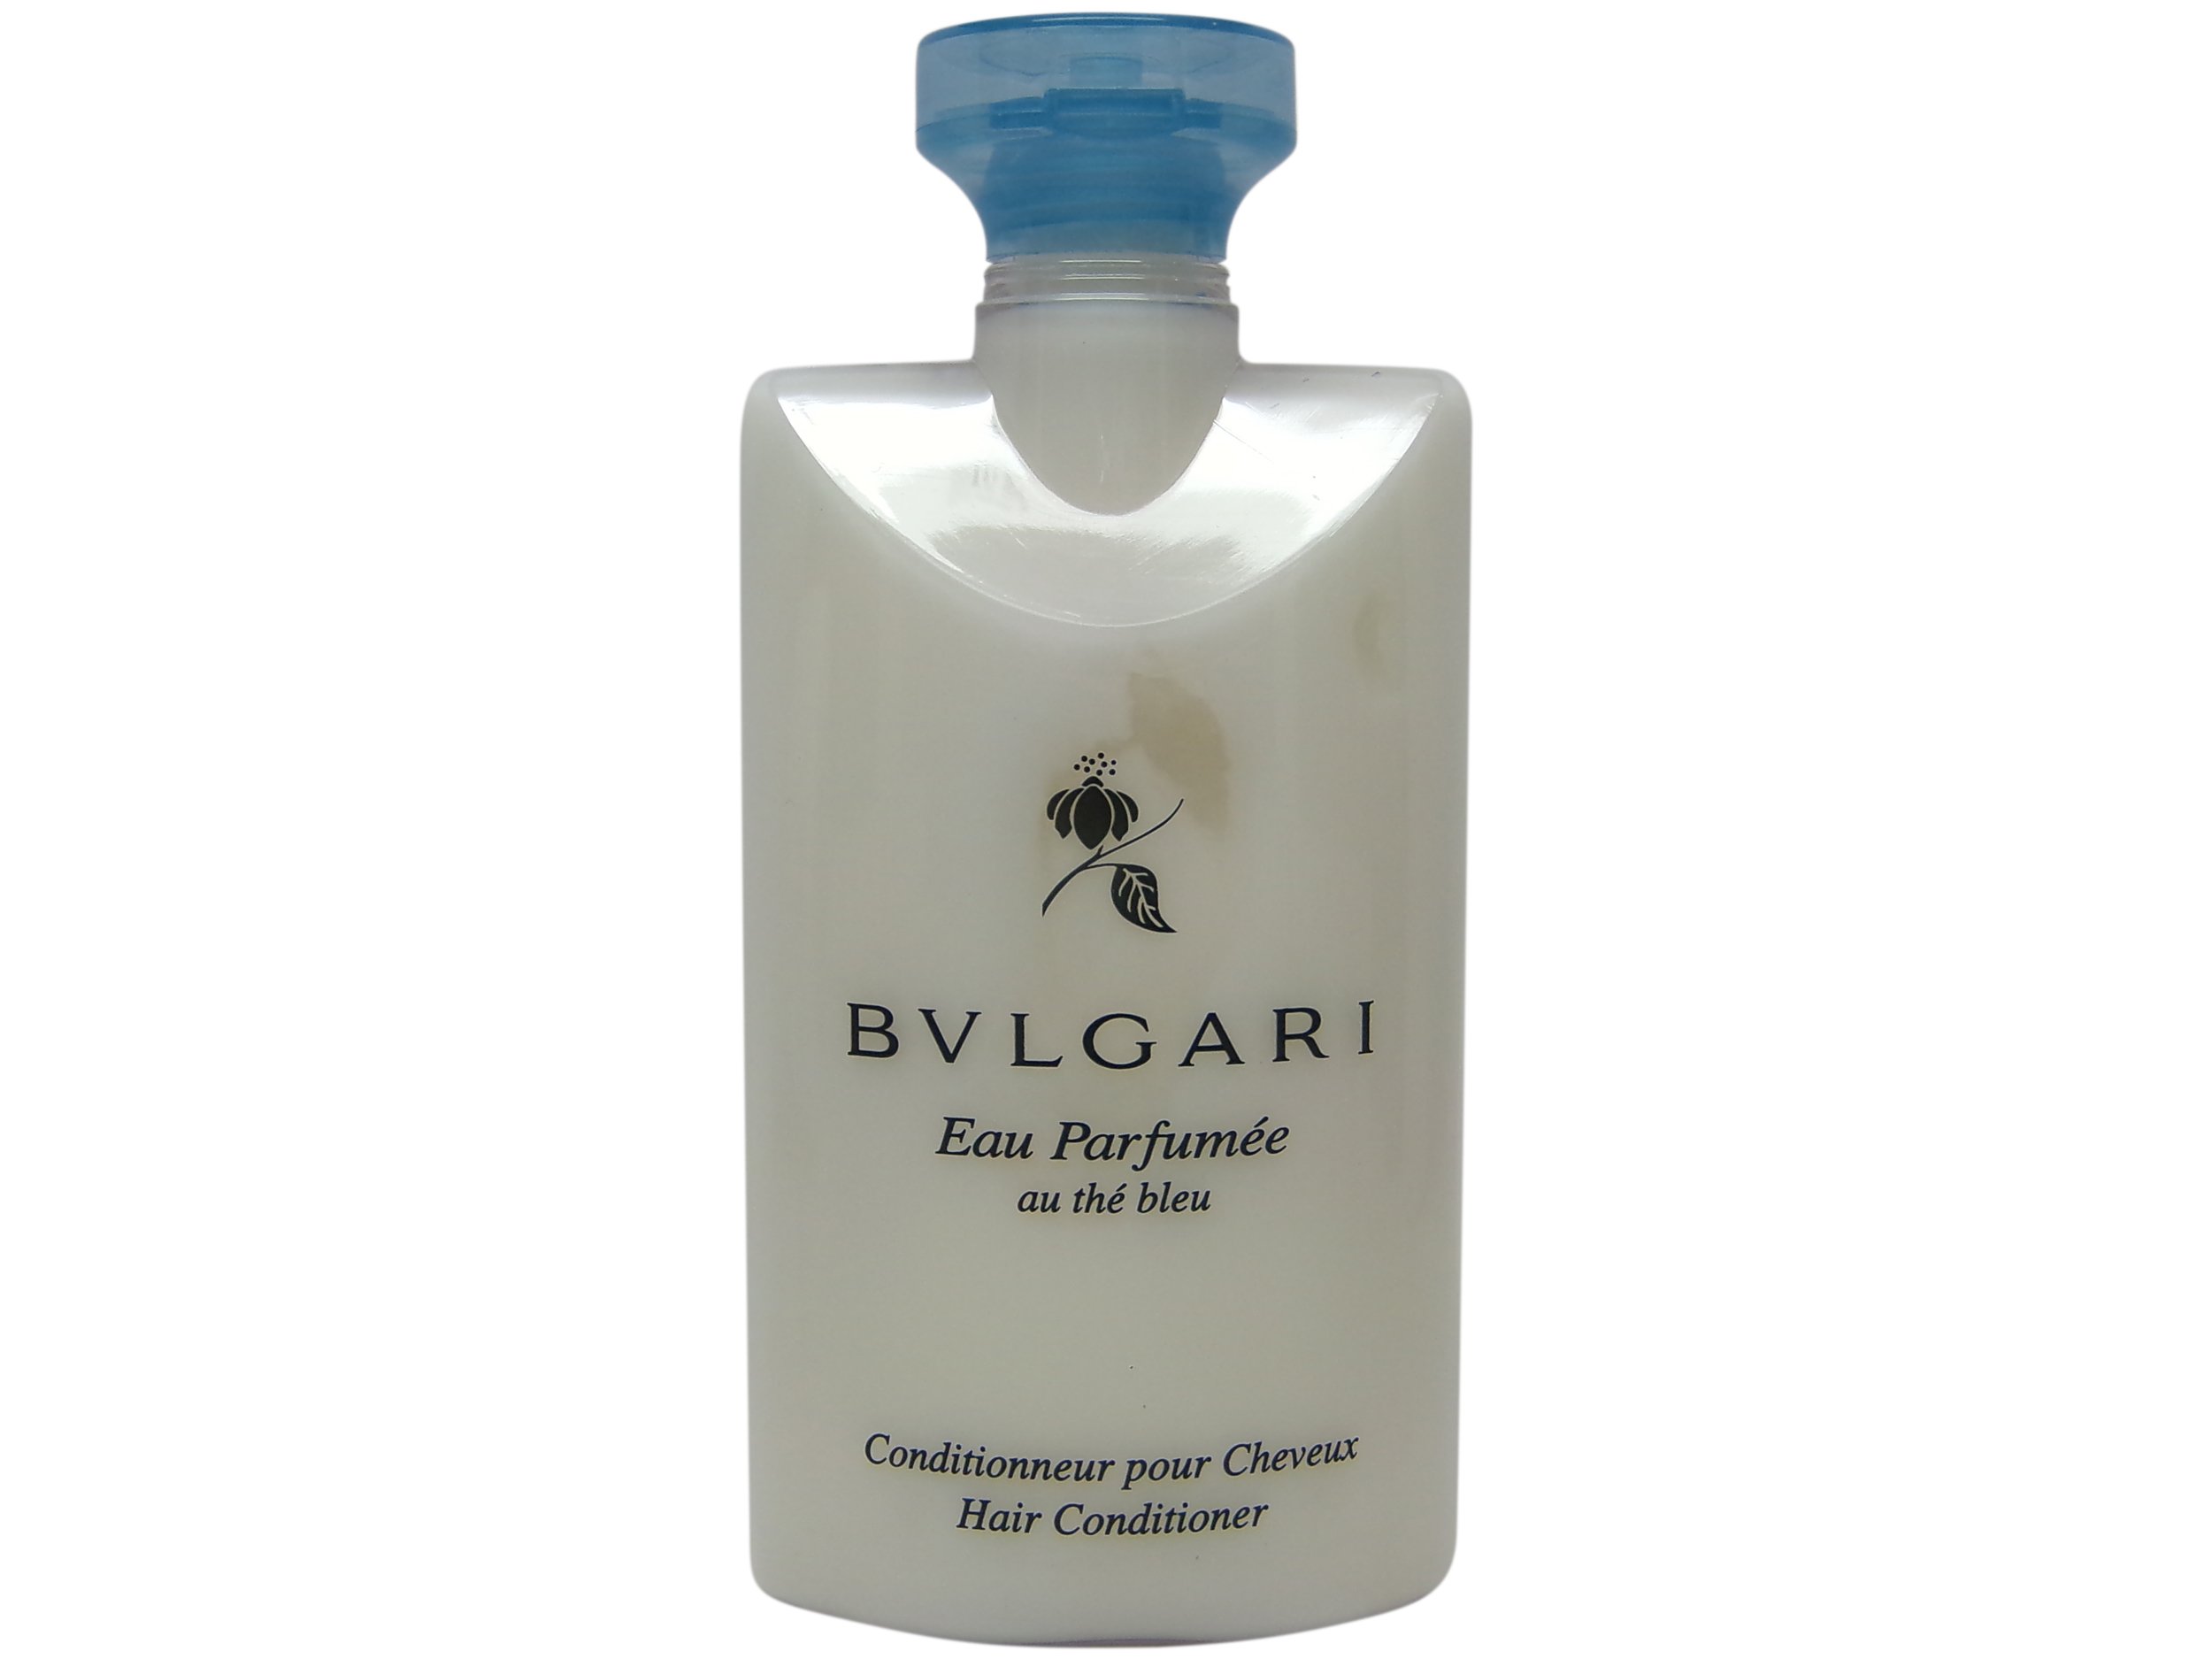 bvlgari eau parfumee au the bleu perfume